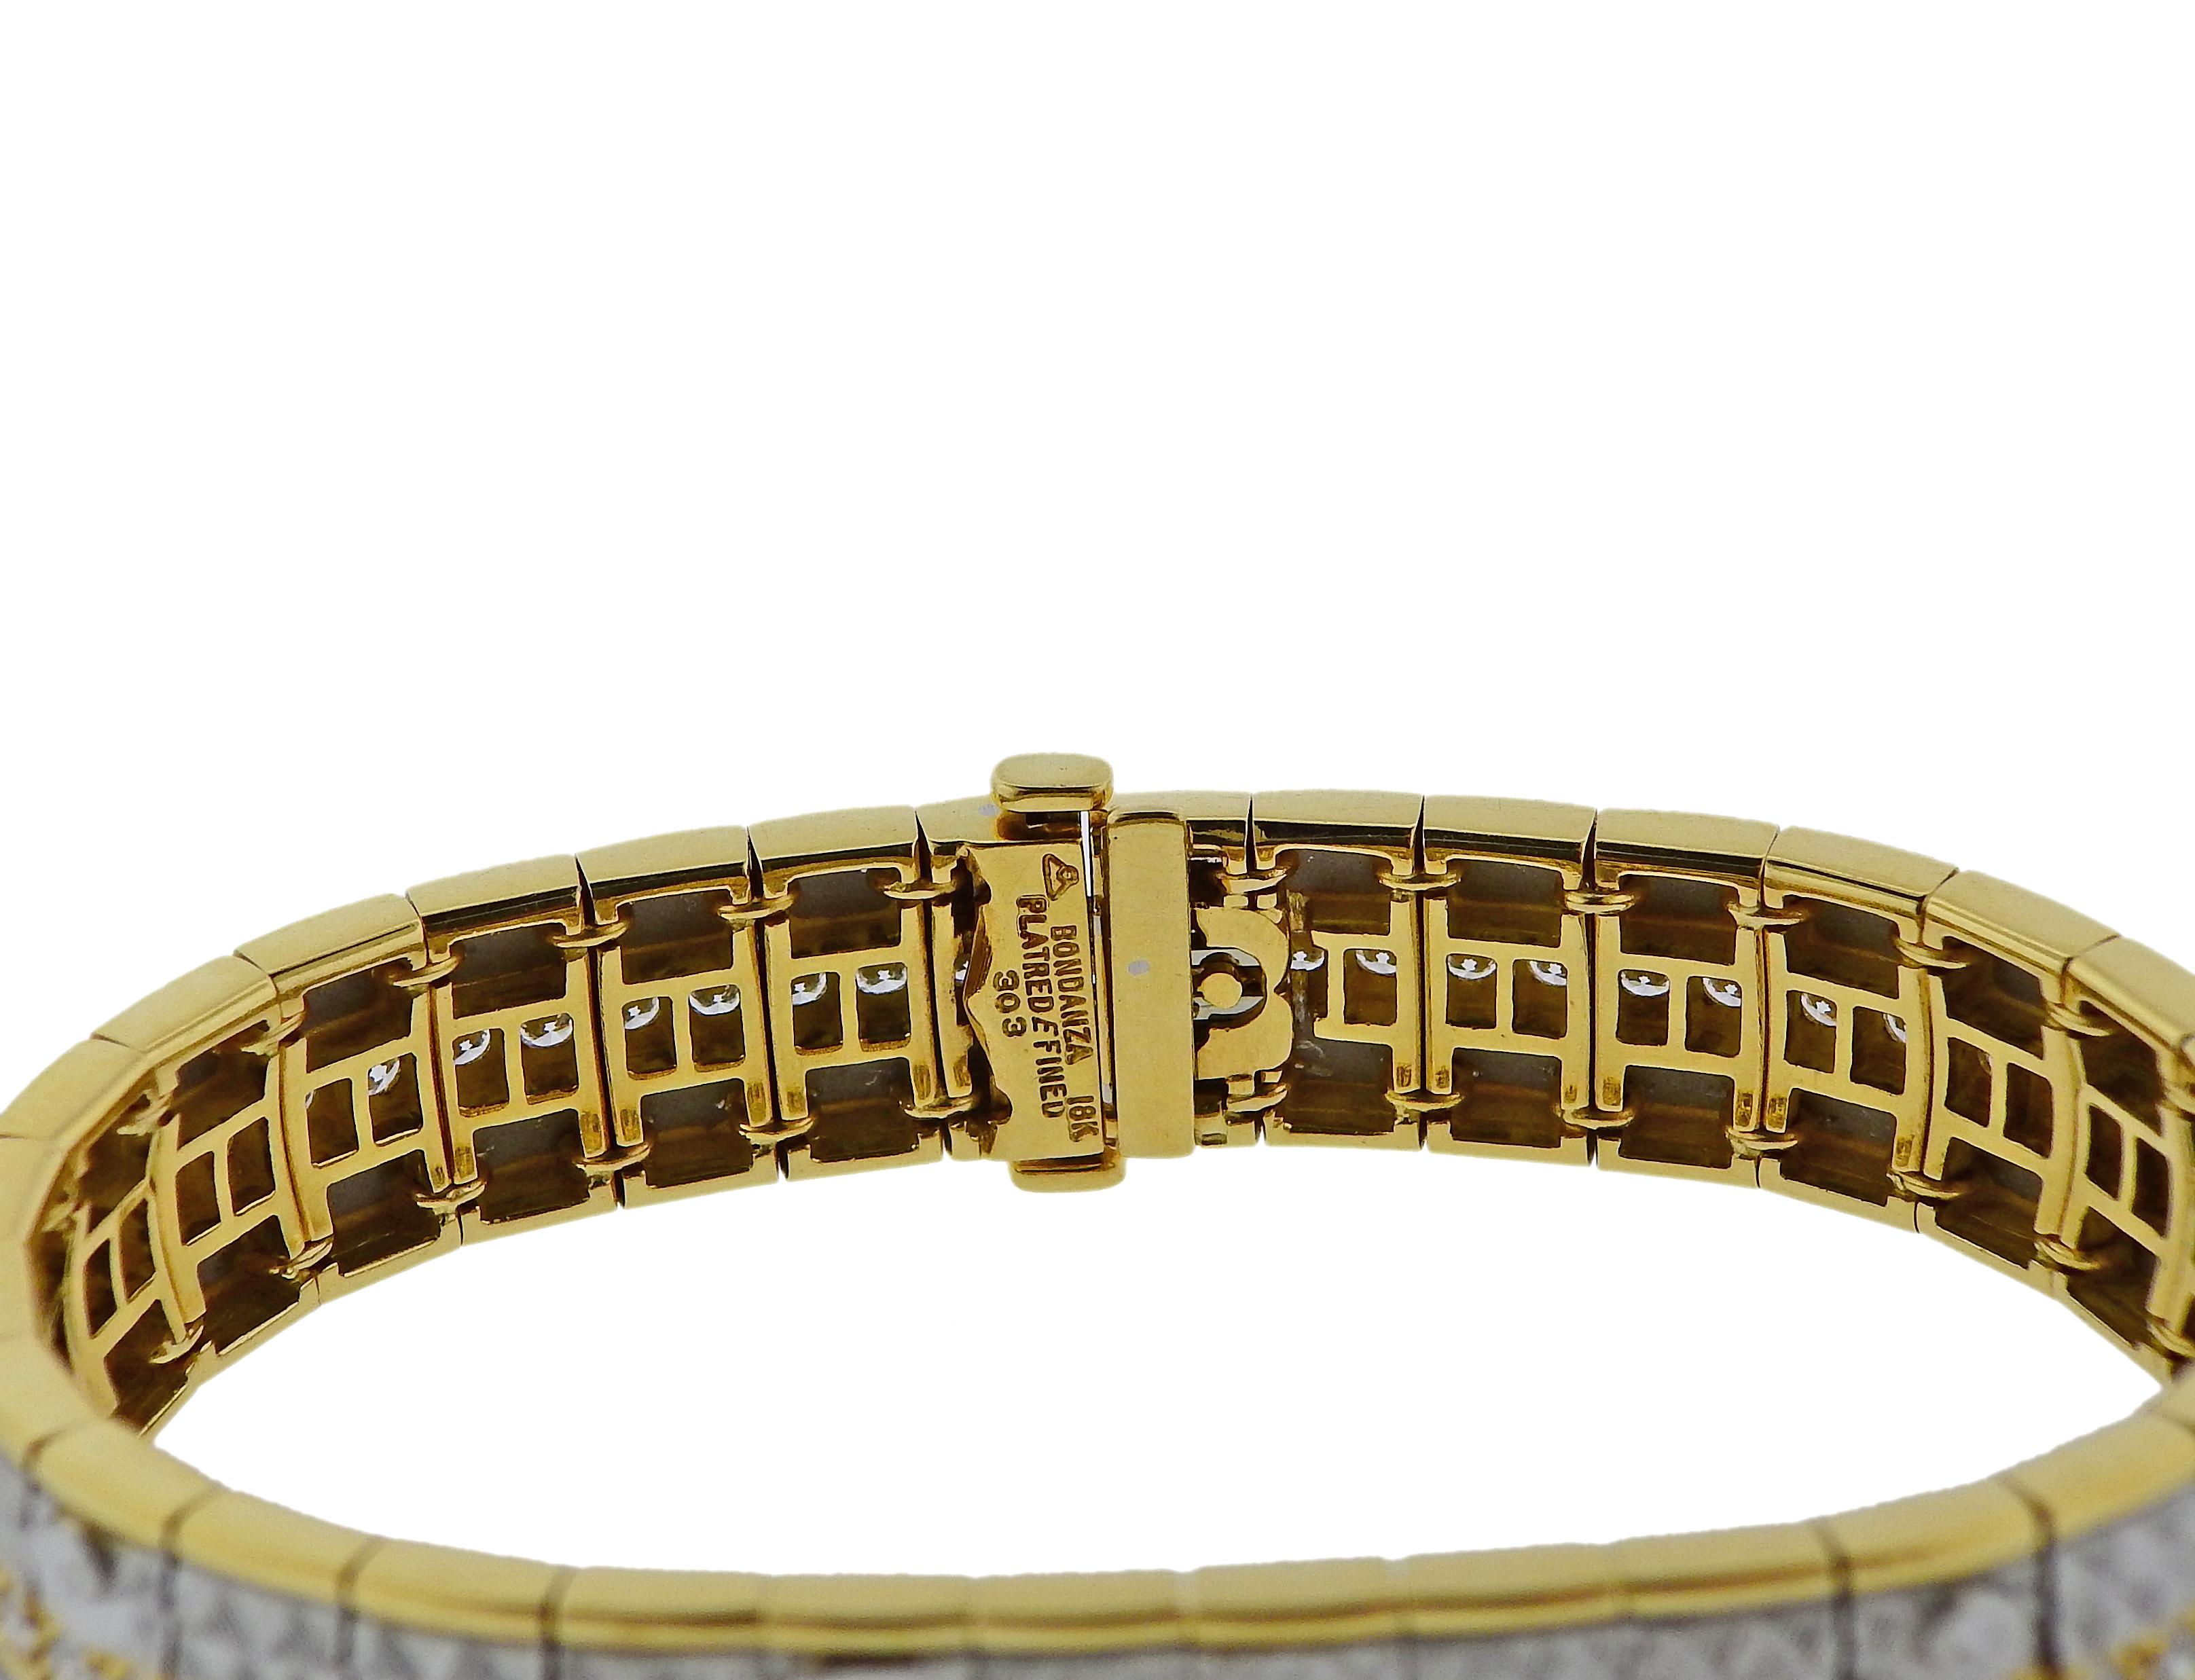 Impressive platinum and 18k gold bracelet by Michael Bondanza, set with  3.03ctw in G/VS diamonds. Bracelet is 7